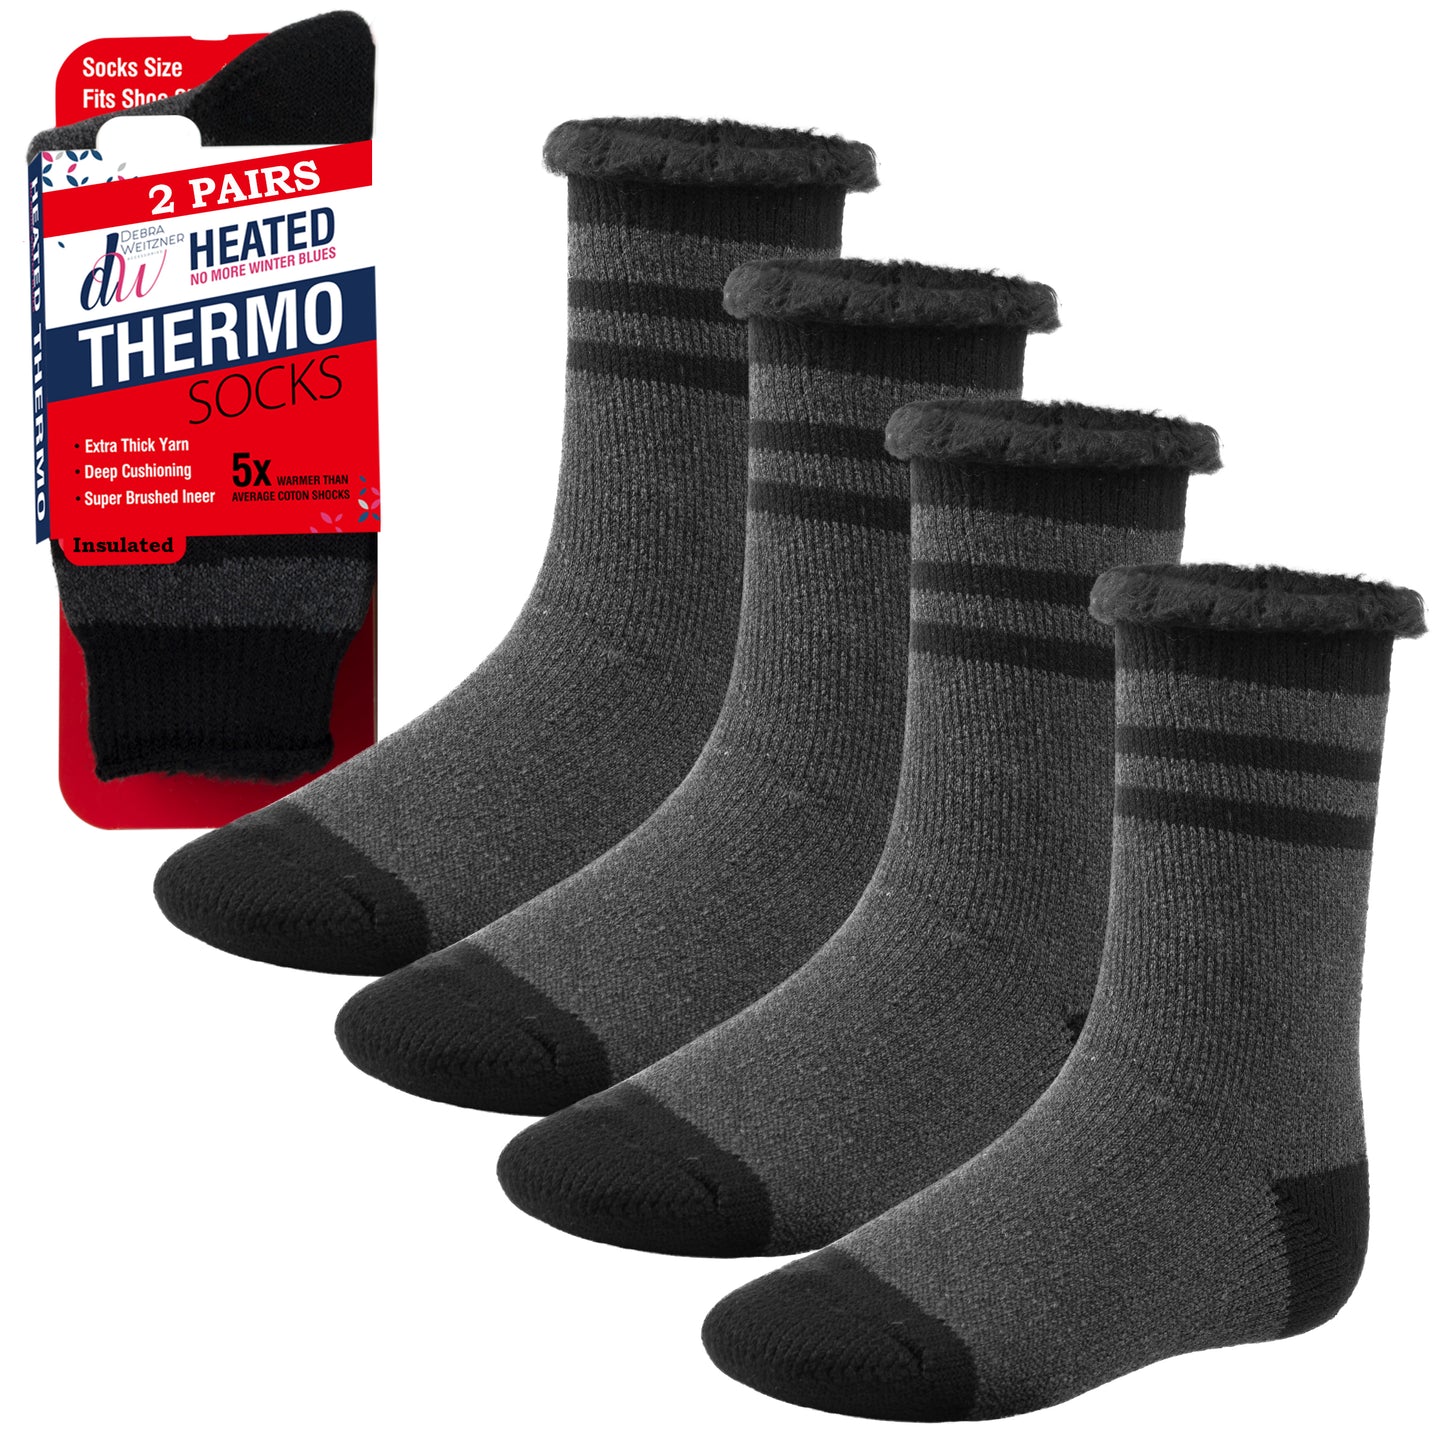 Thermal Winter Socks for Men and Women - 2 Pairs – Debra Weitzner